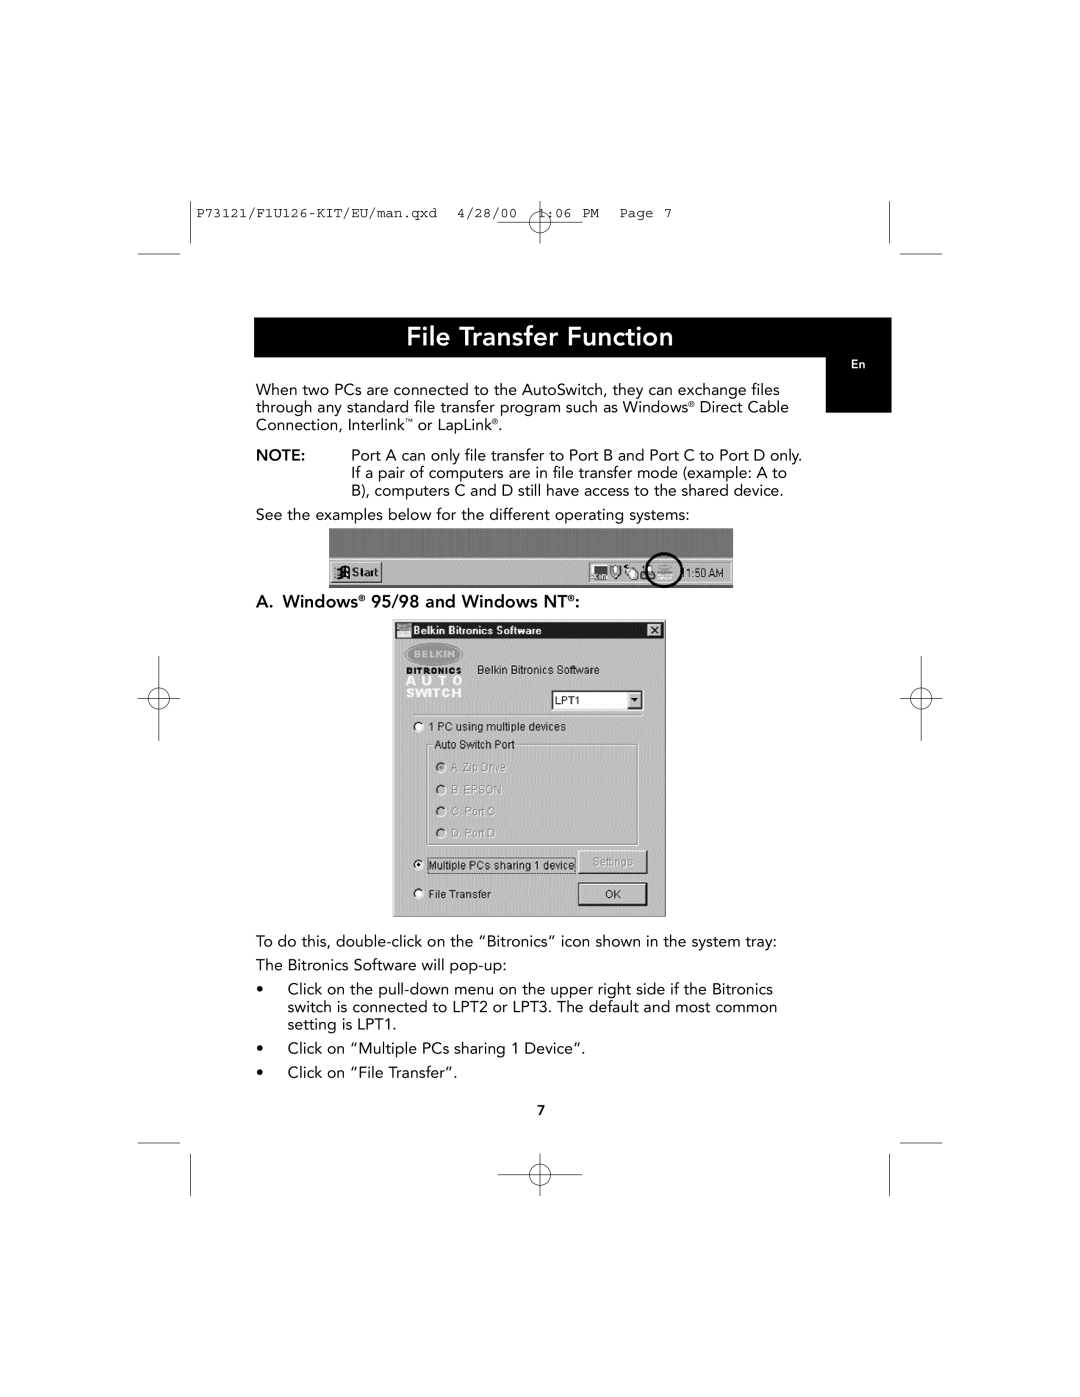 Belkin F1U126-KIT, P73121 user manual File Transfer Function, A. Windows 95/98 and Windows NT 